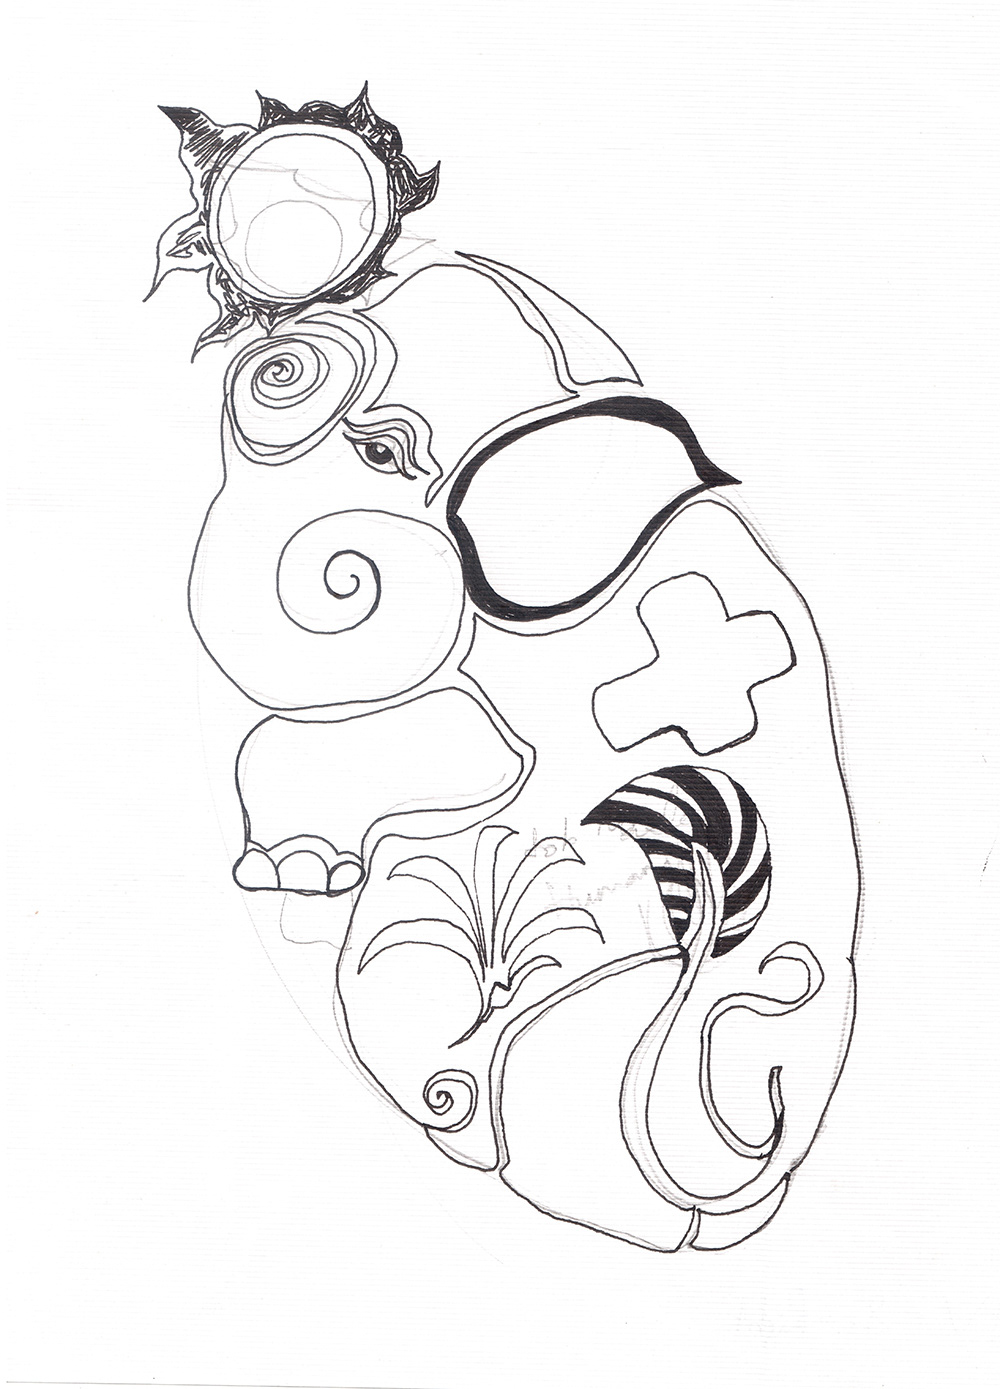 Kiruku Buddha buddhism bodhi tree yin-yang wisdom logo